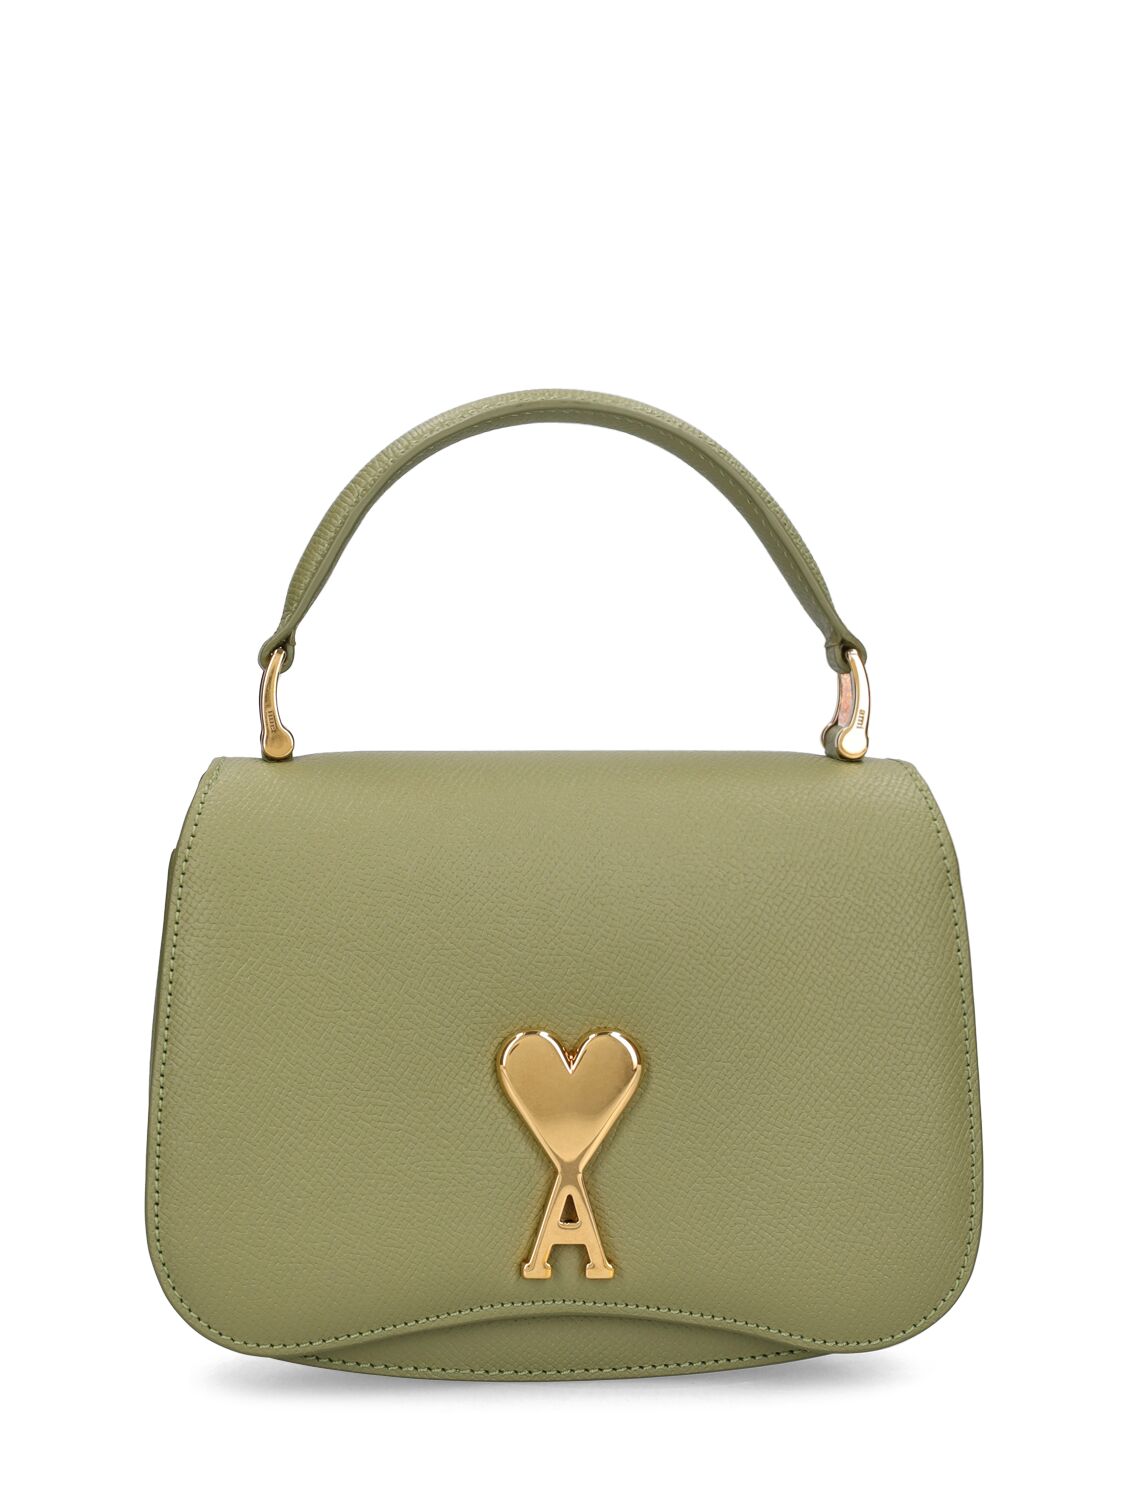 Ami Alexandre Mattiussi Paris Leather Mini Bag In Olive Green